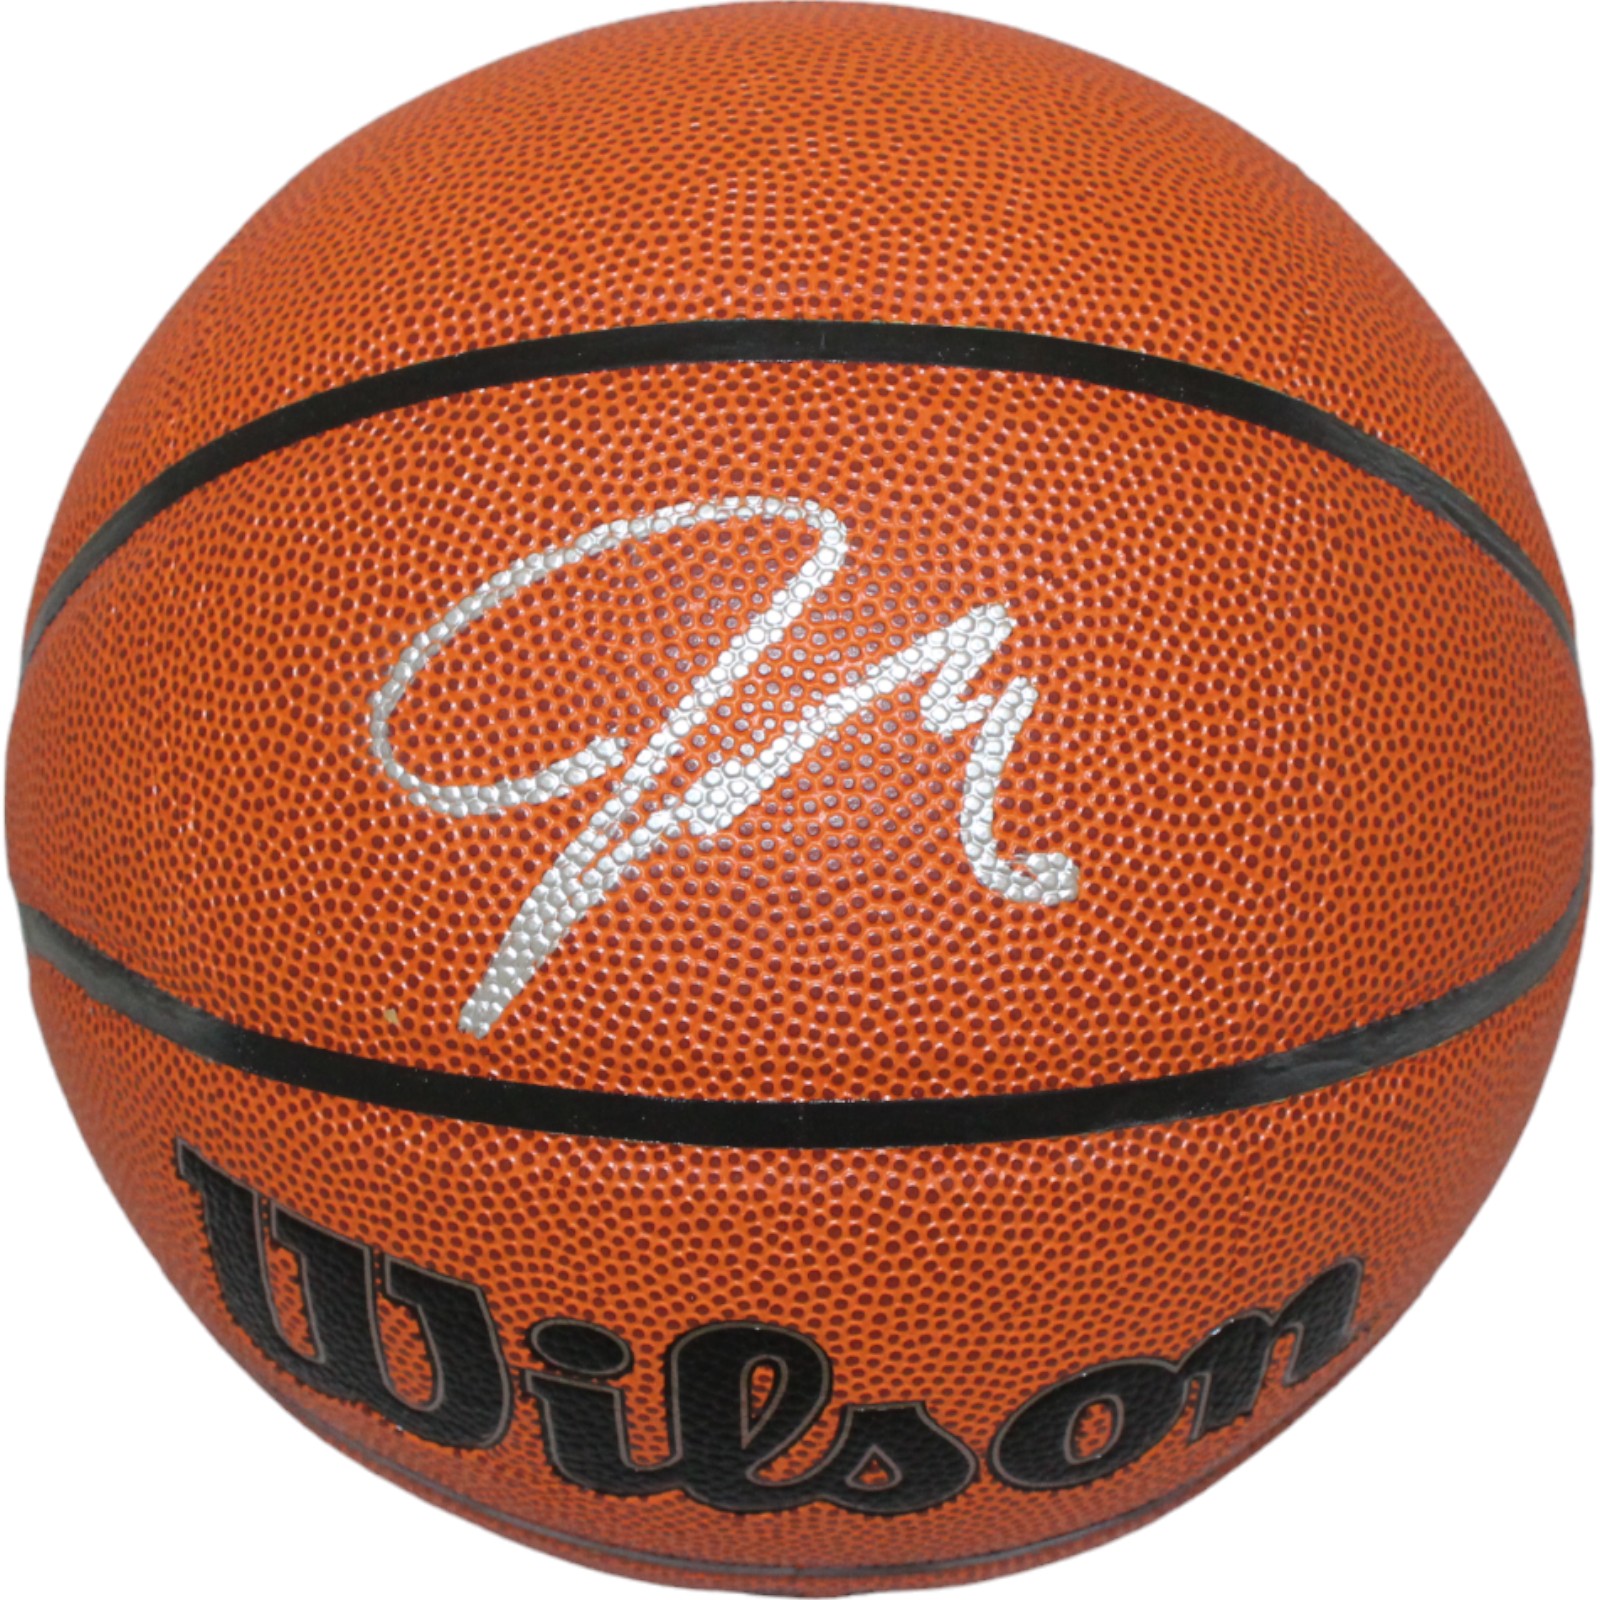 Jamal Murray Autographed/Signed Denver Basketball FAN